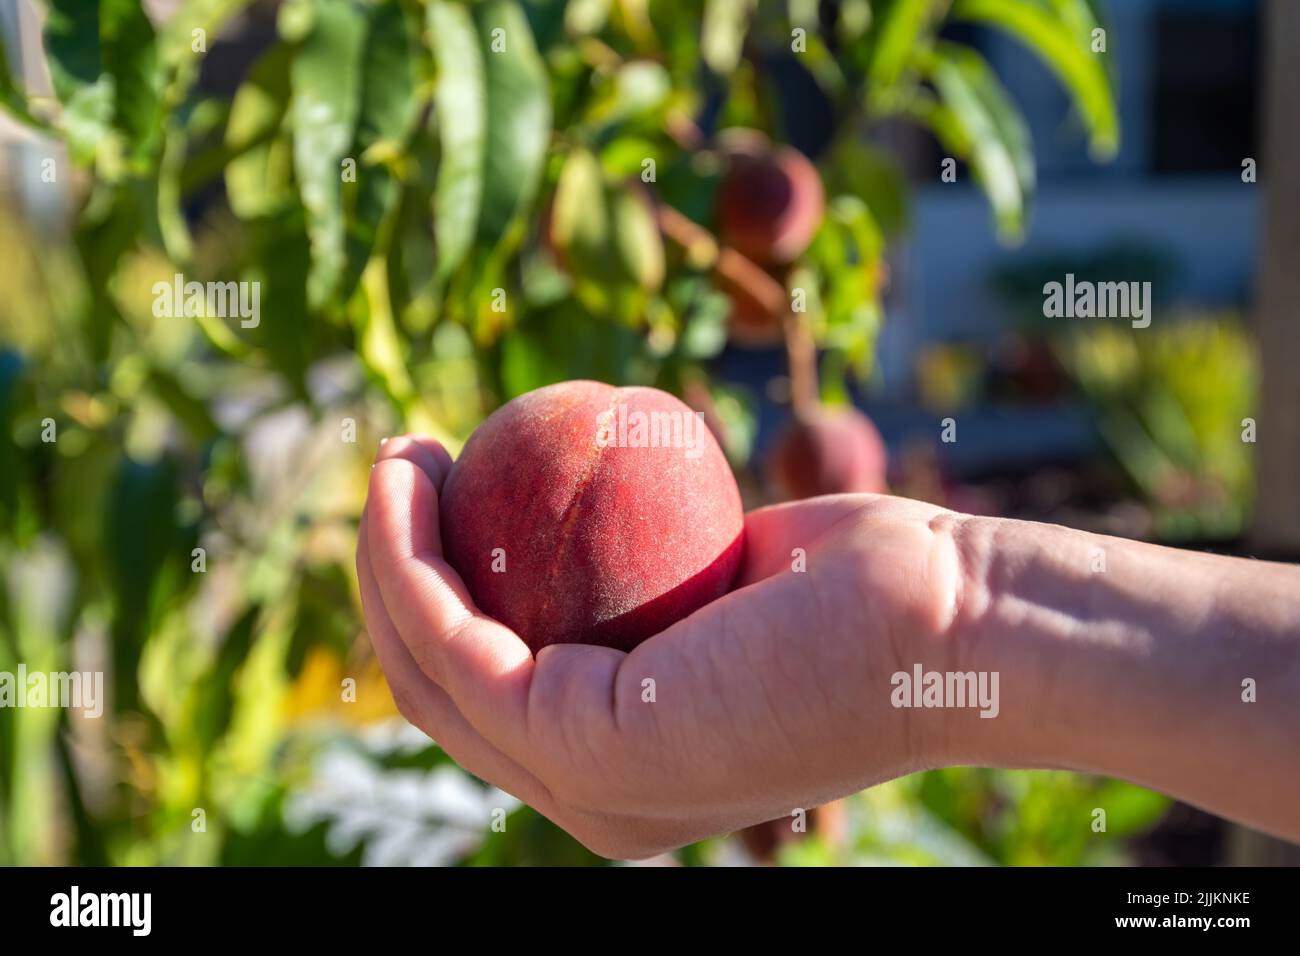 Home backyard grown peach in hand, South Australia Stock Photo